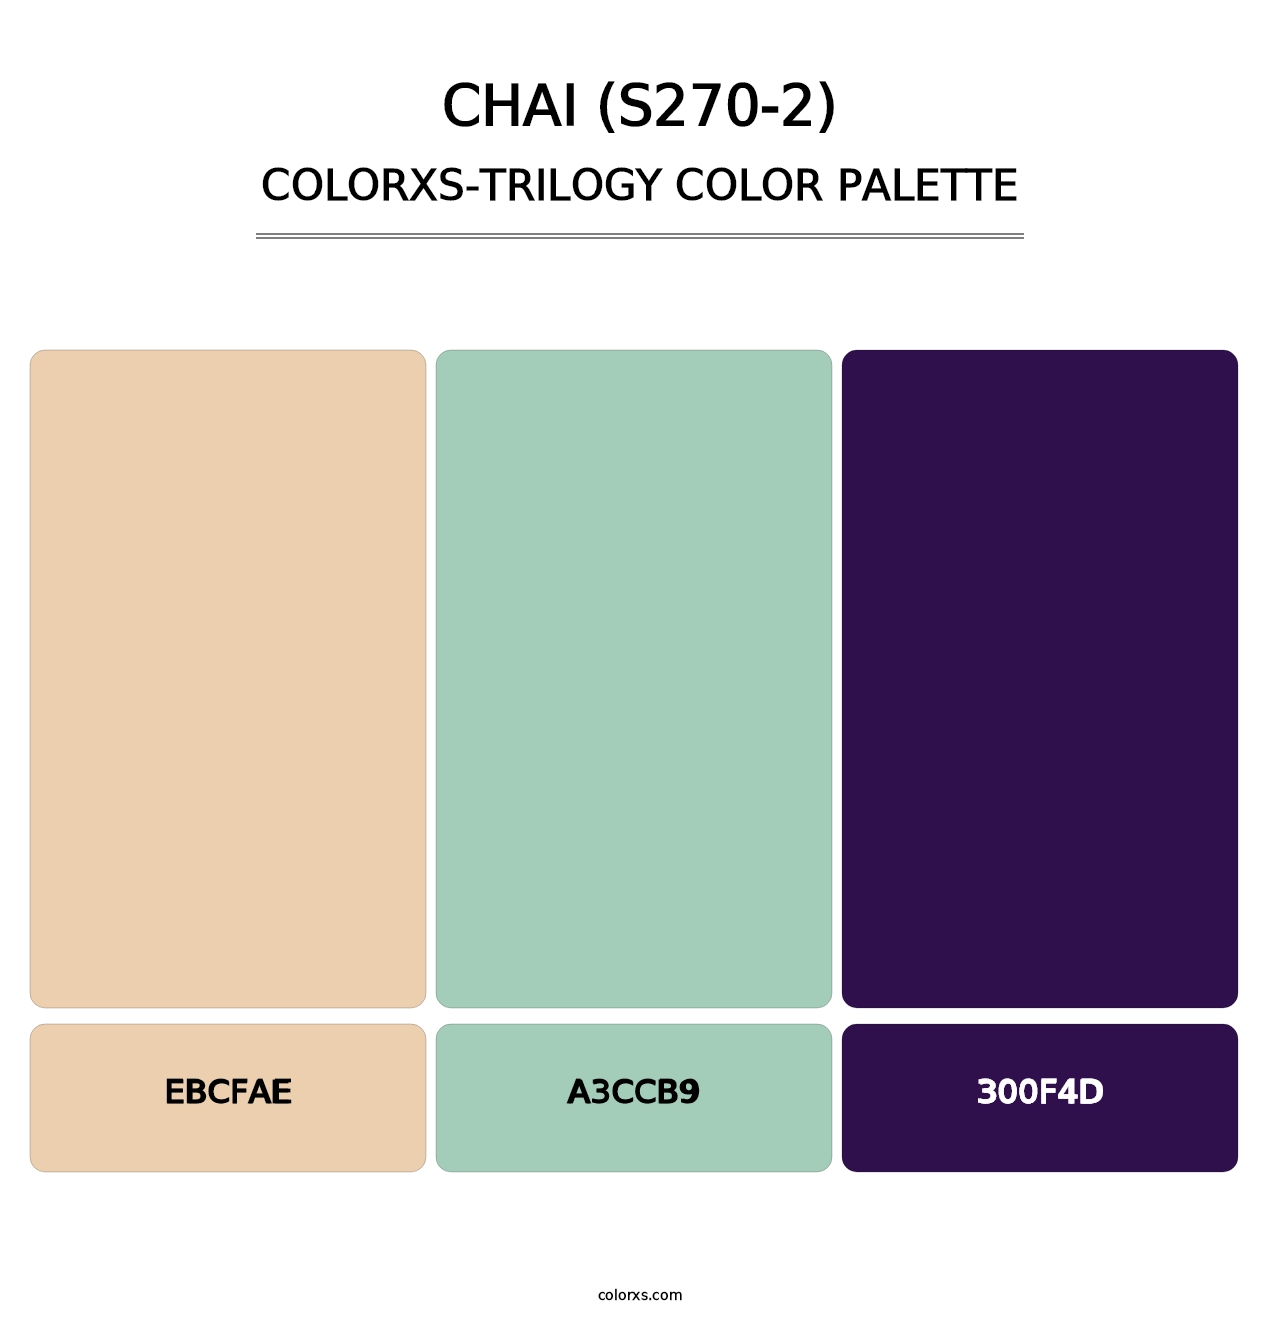 Chai (S270-2) - Colorxs Trilogy Palette